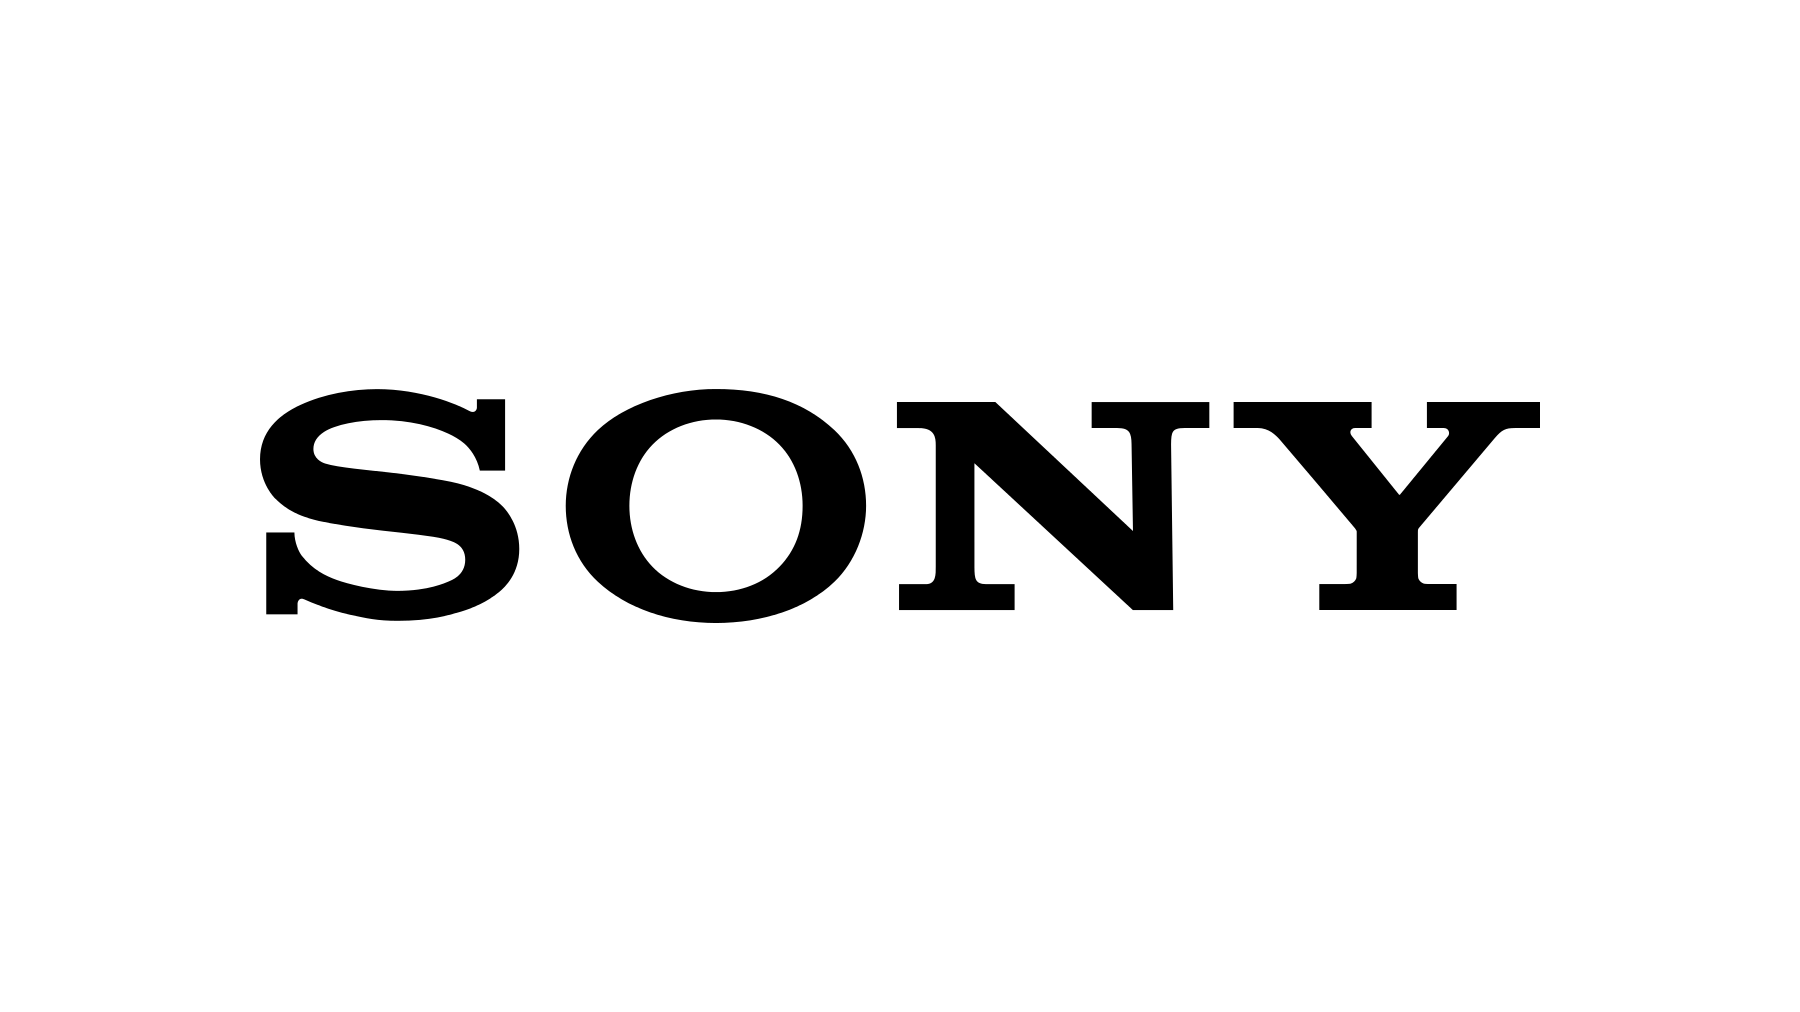 1800 Logo - Sony logo | Dwglogo